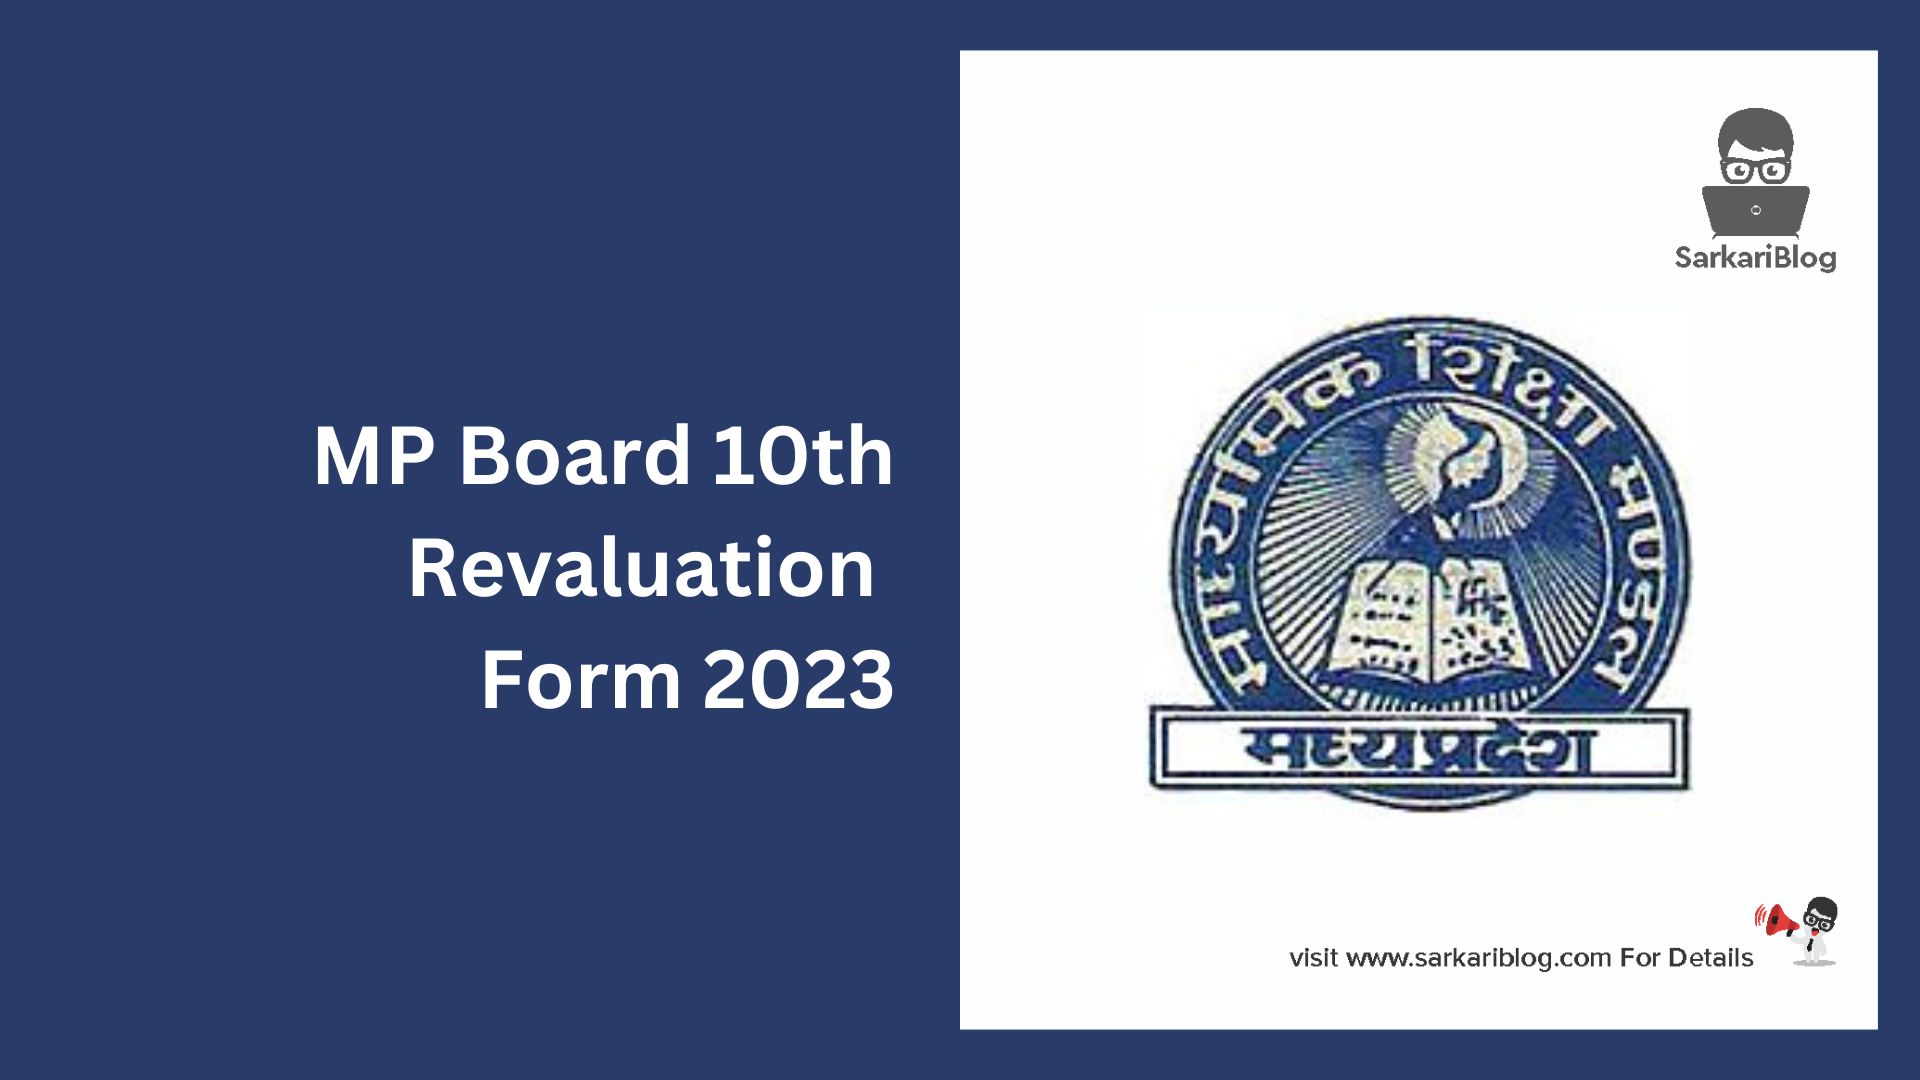 MP Board 10th Revaluation Form 2023